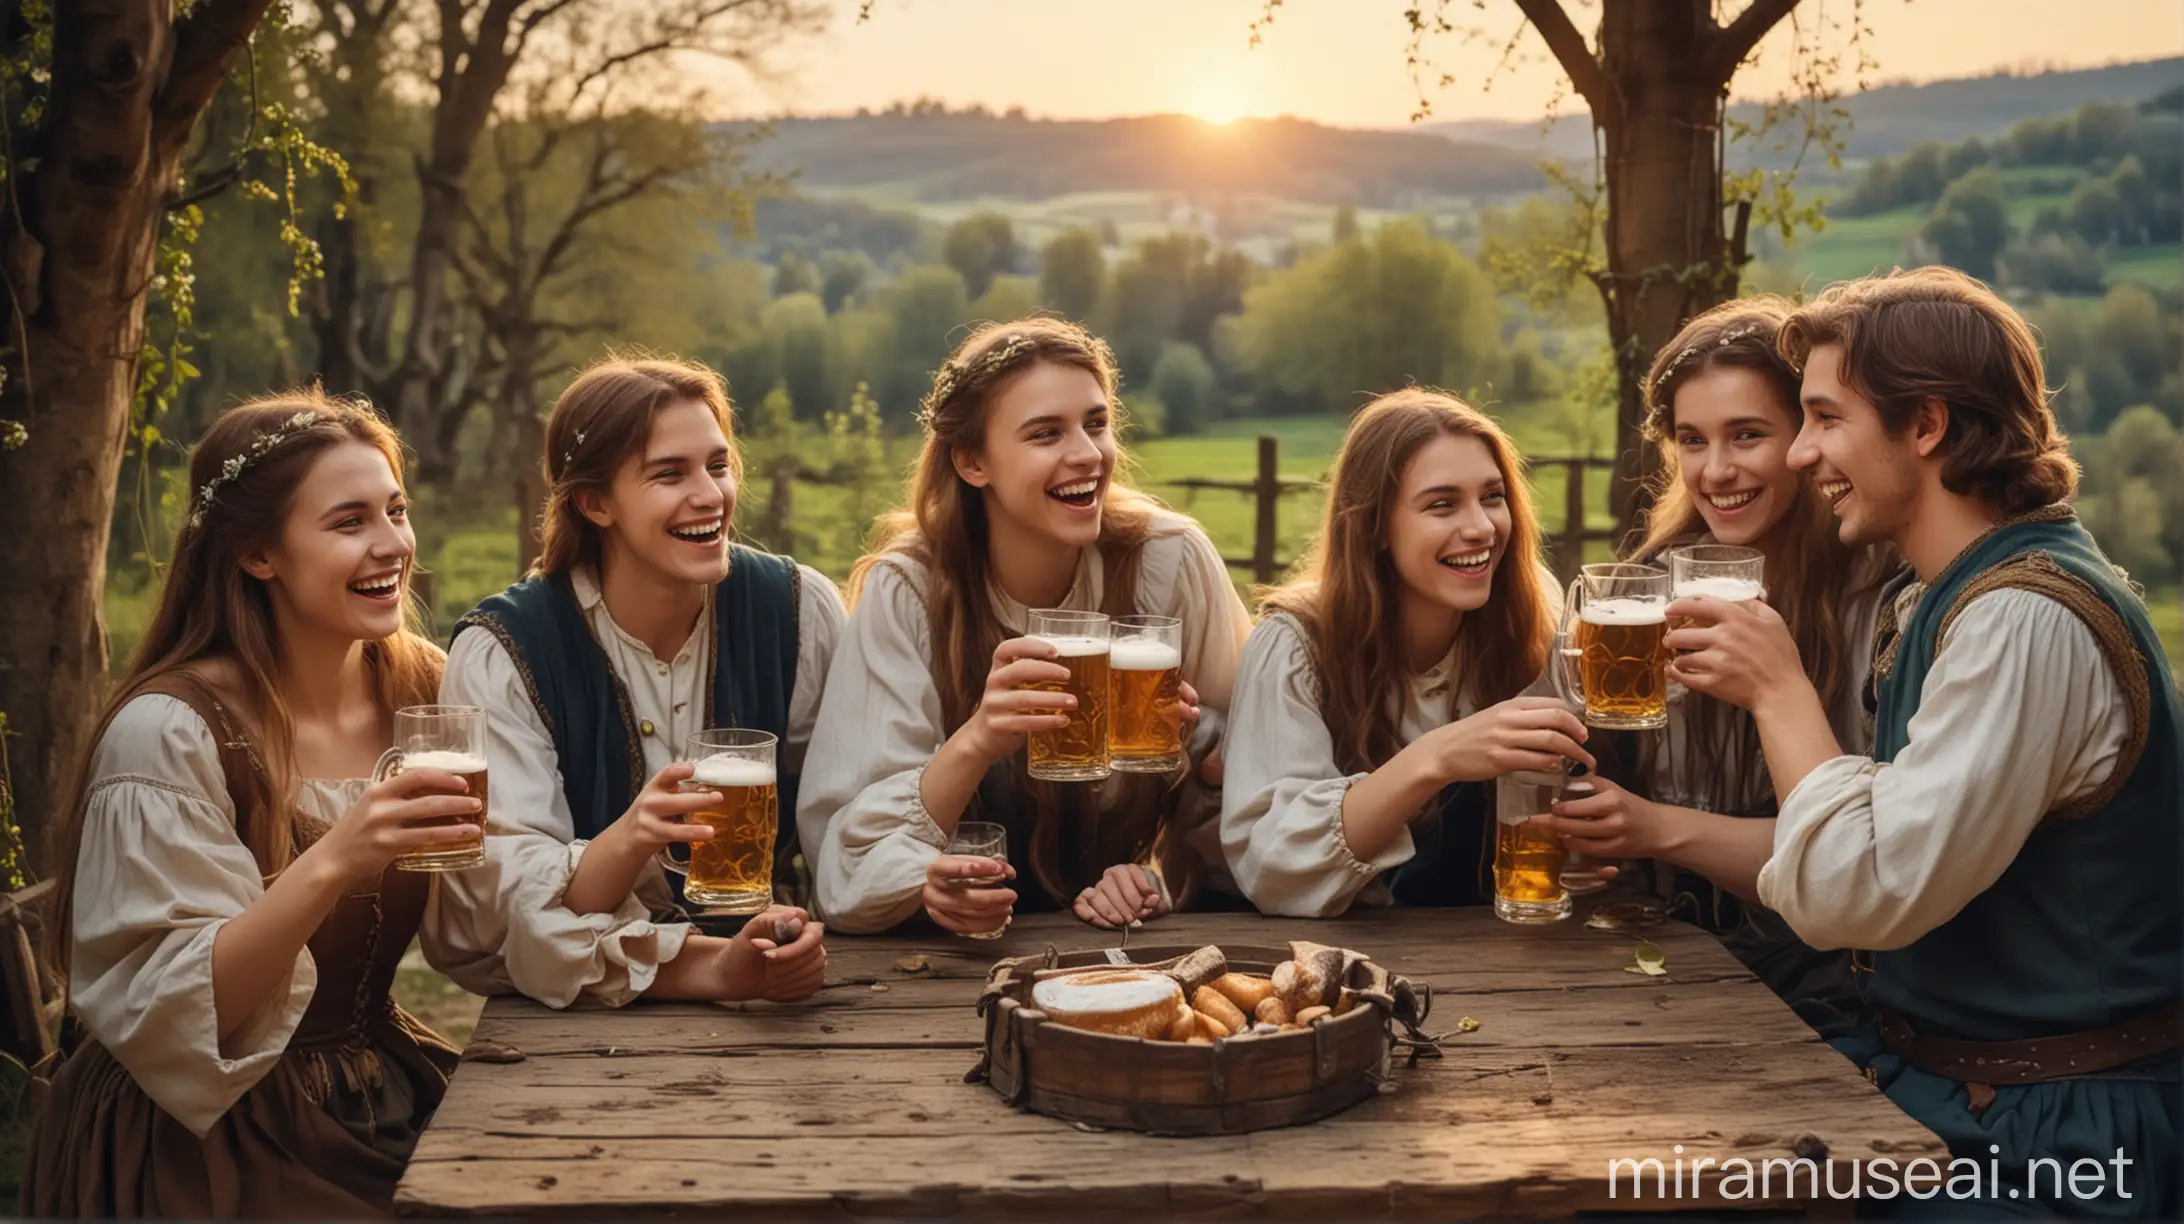 Medieval Evening Gathering Joyful Young Adults Enjoying Beer in Spring Landscape